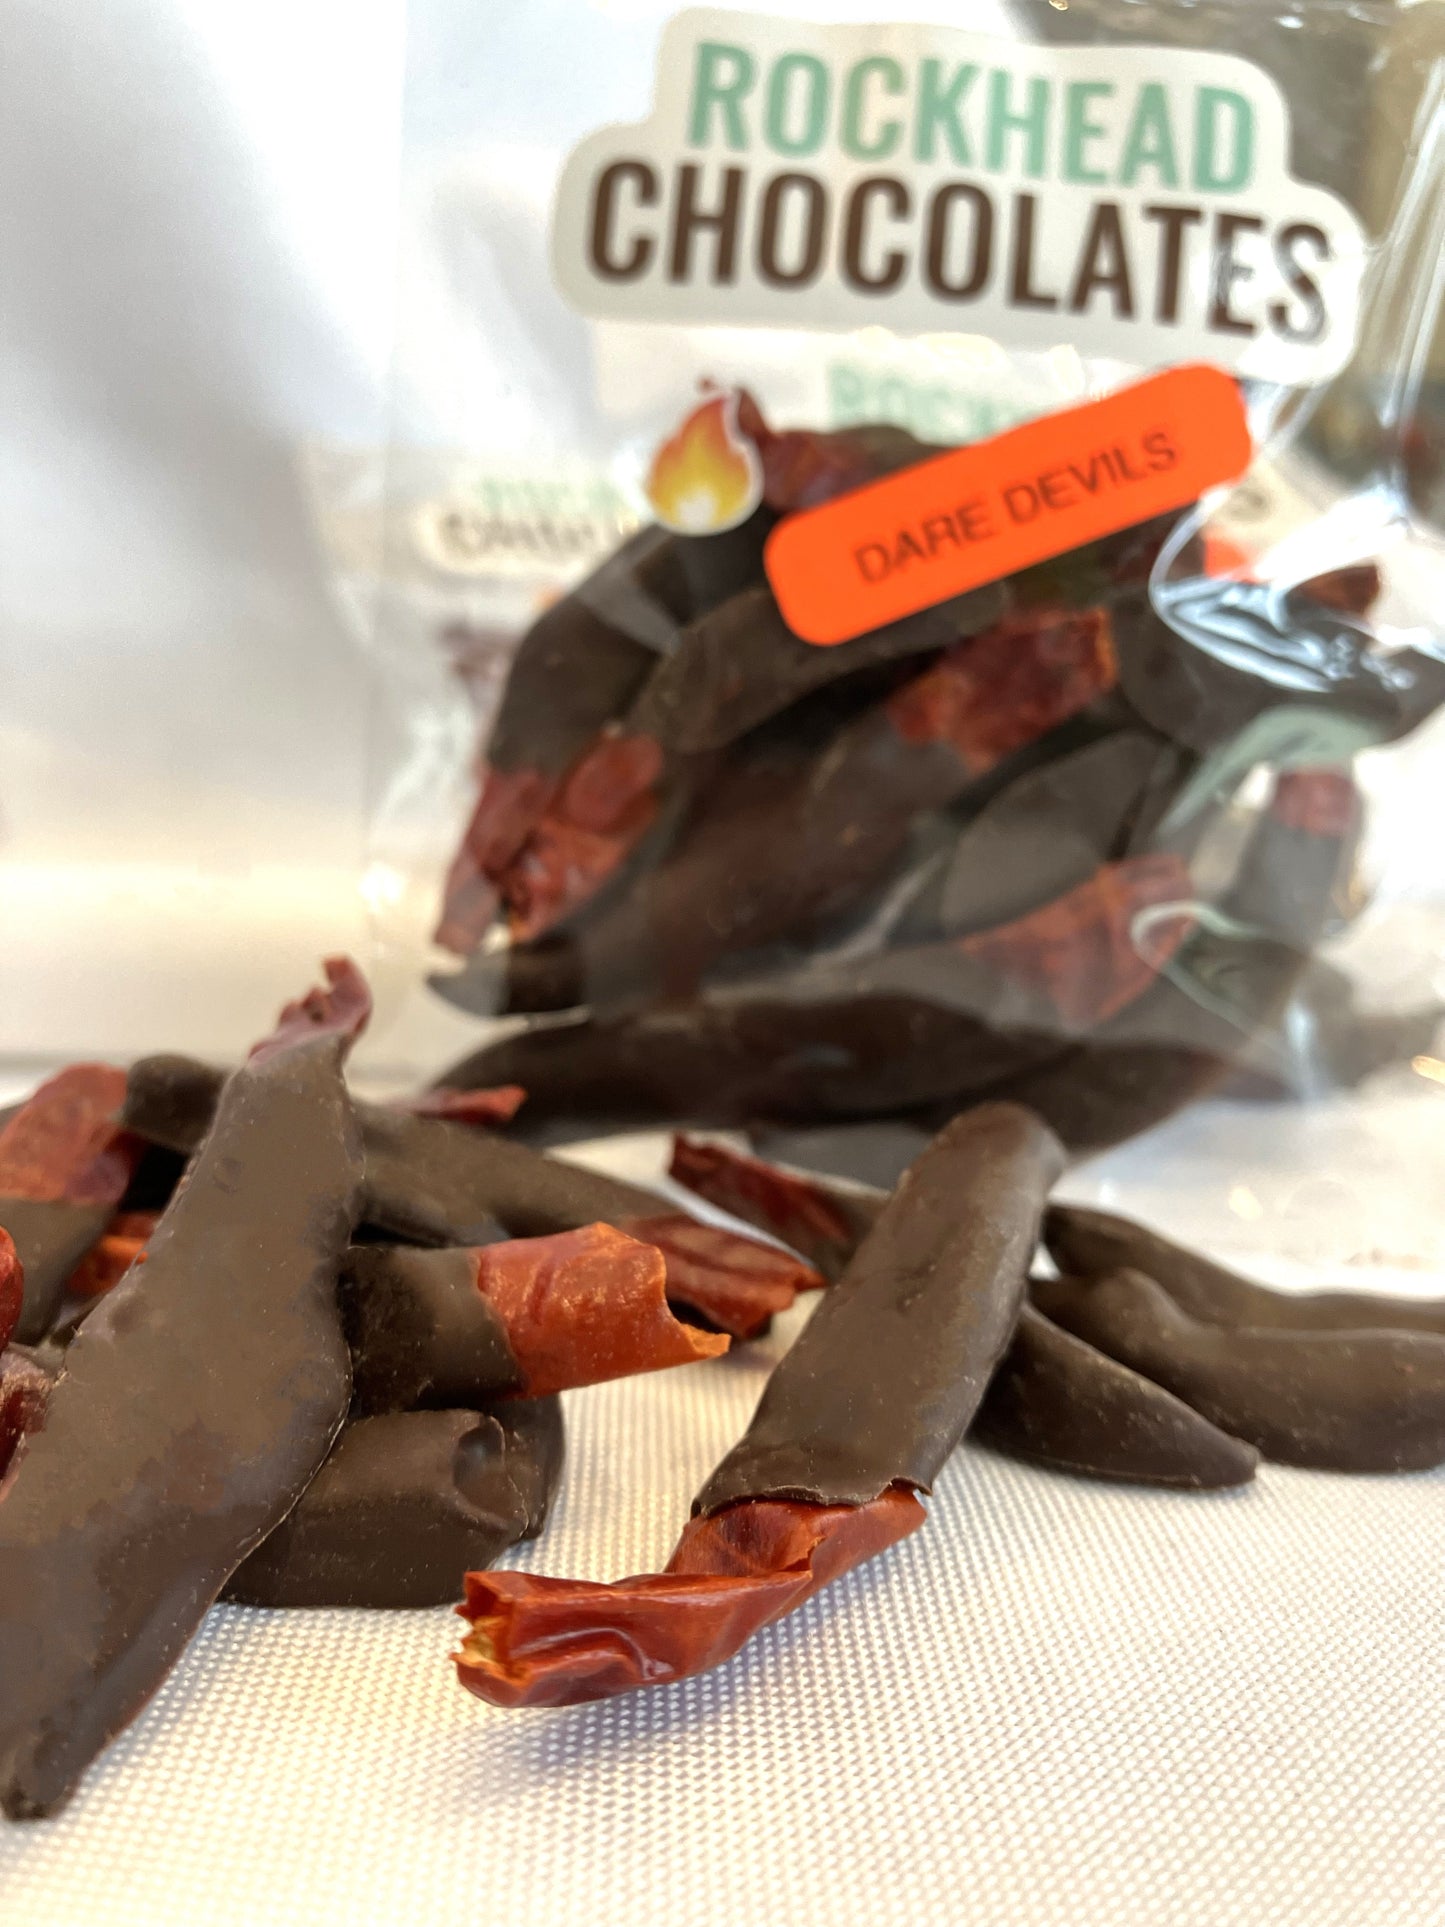 Dare Devils - Hot Peppers in Dark Chocolate